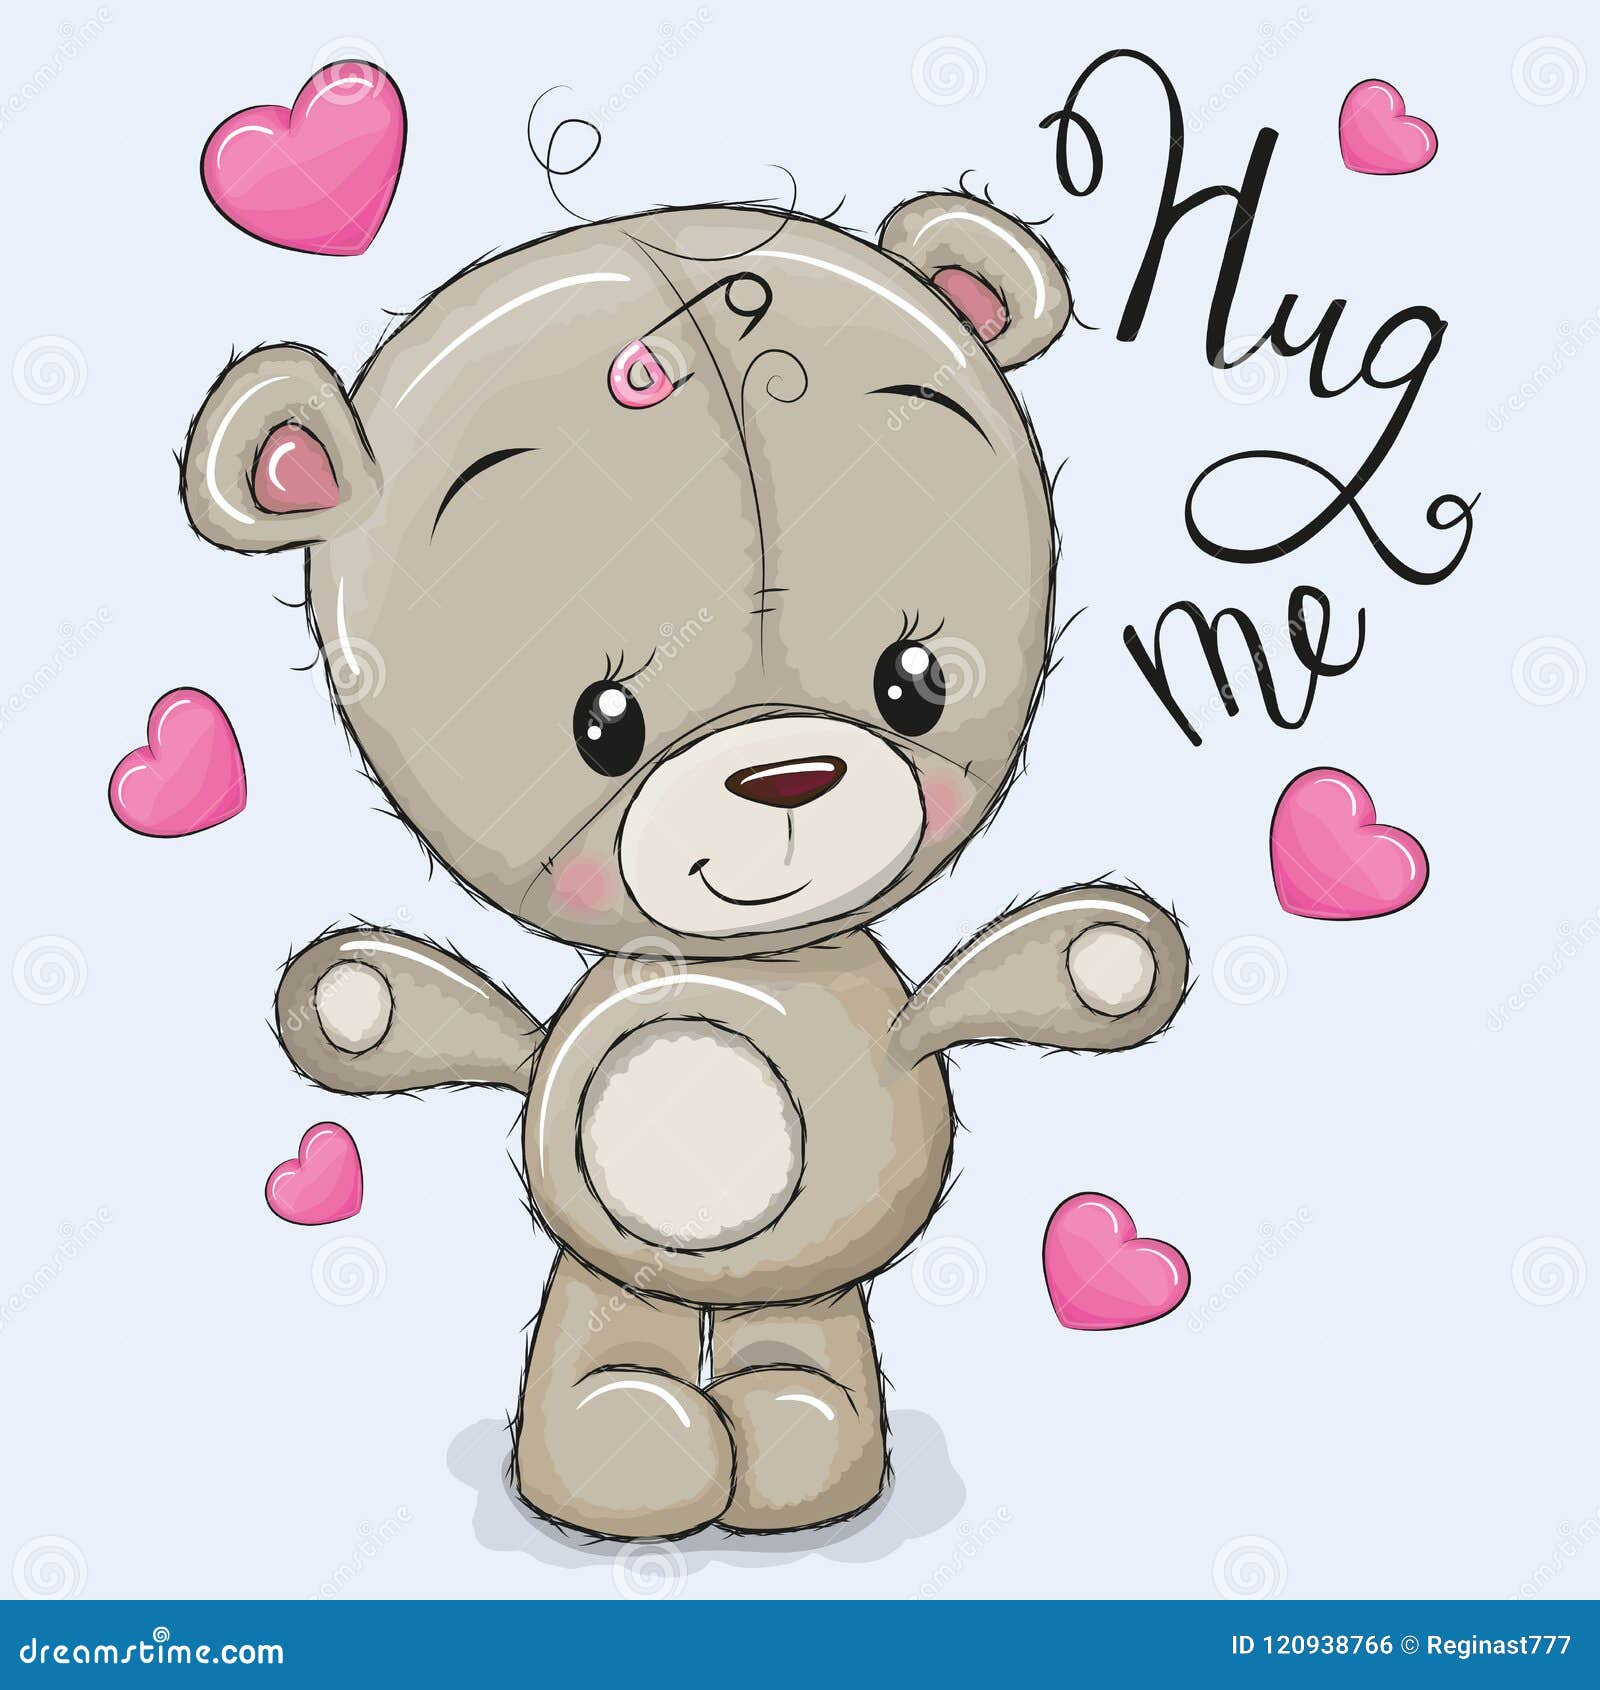 Hug me Card with Hearts